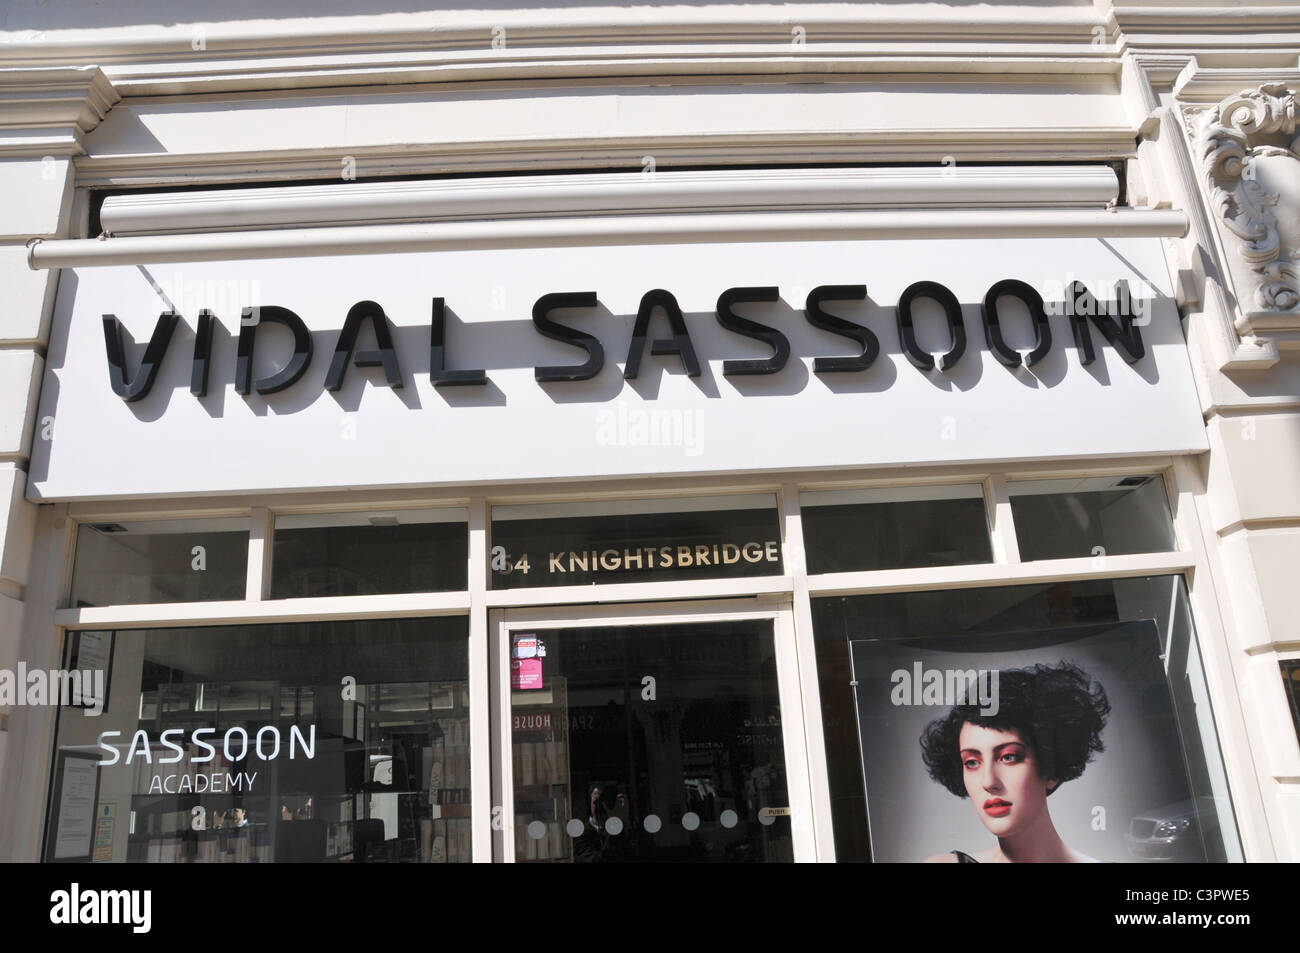 Vidal Sassoon Academy Knightsbridge Hair salon haircut style Stock Photo